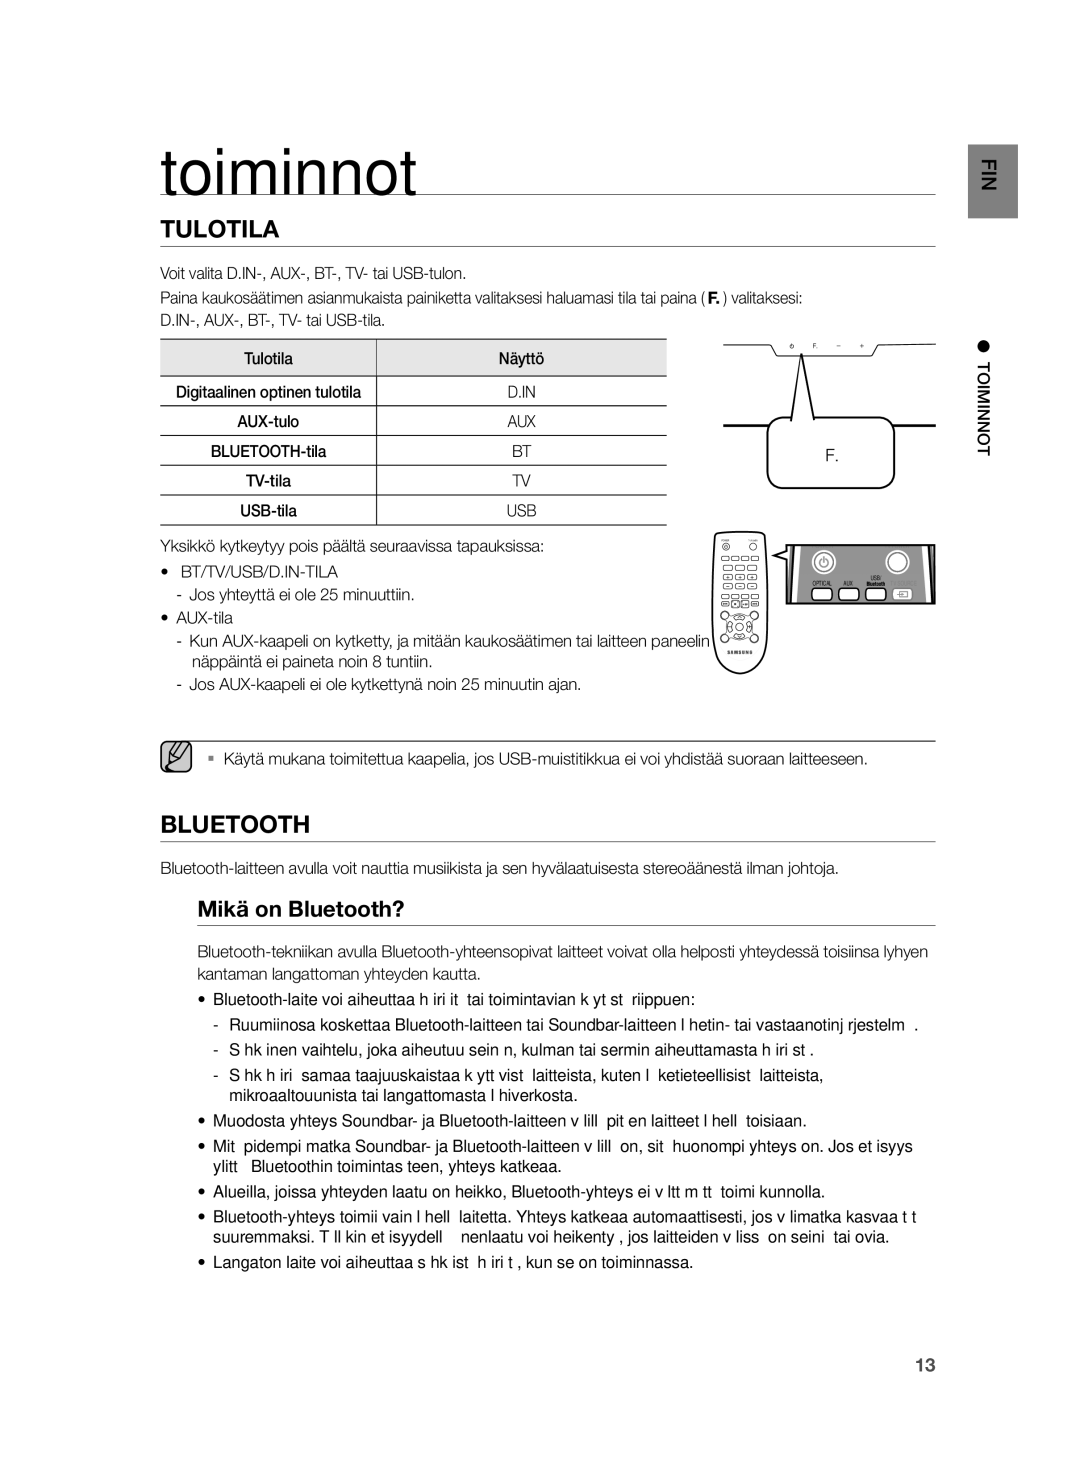 Samsung HW-H355/XE manual Toiminnot, Mikä on Bluetooth?, Bt/Tv/Usb/D.In-Tila 